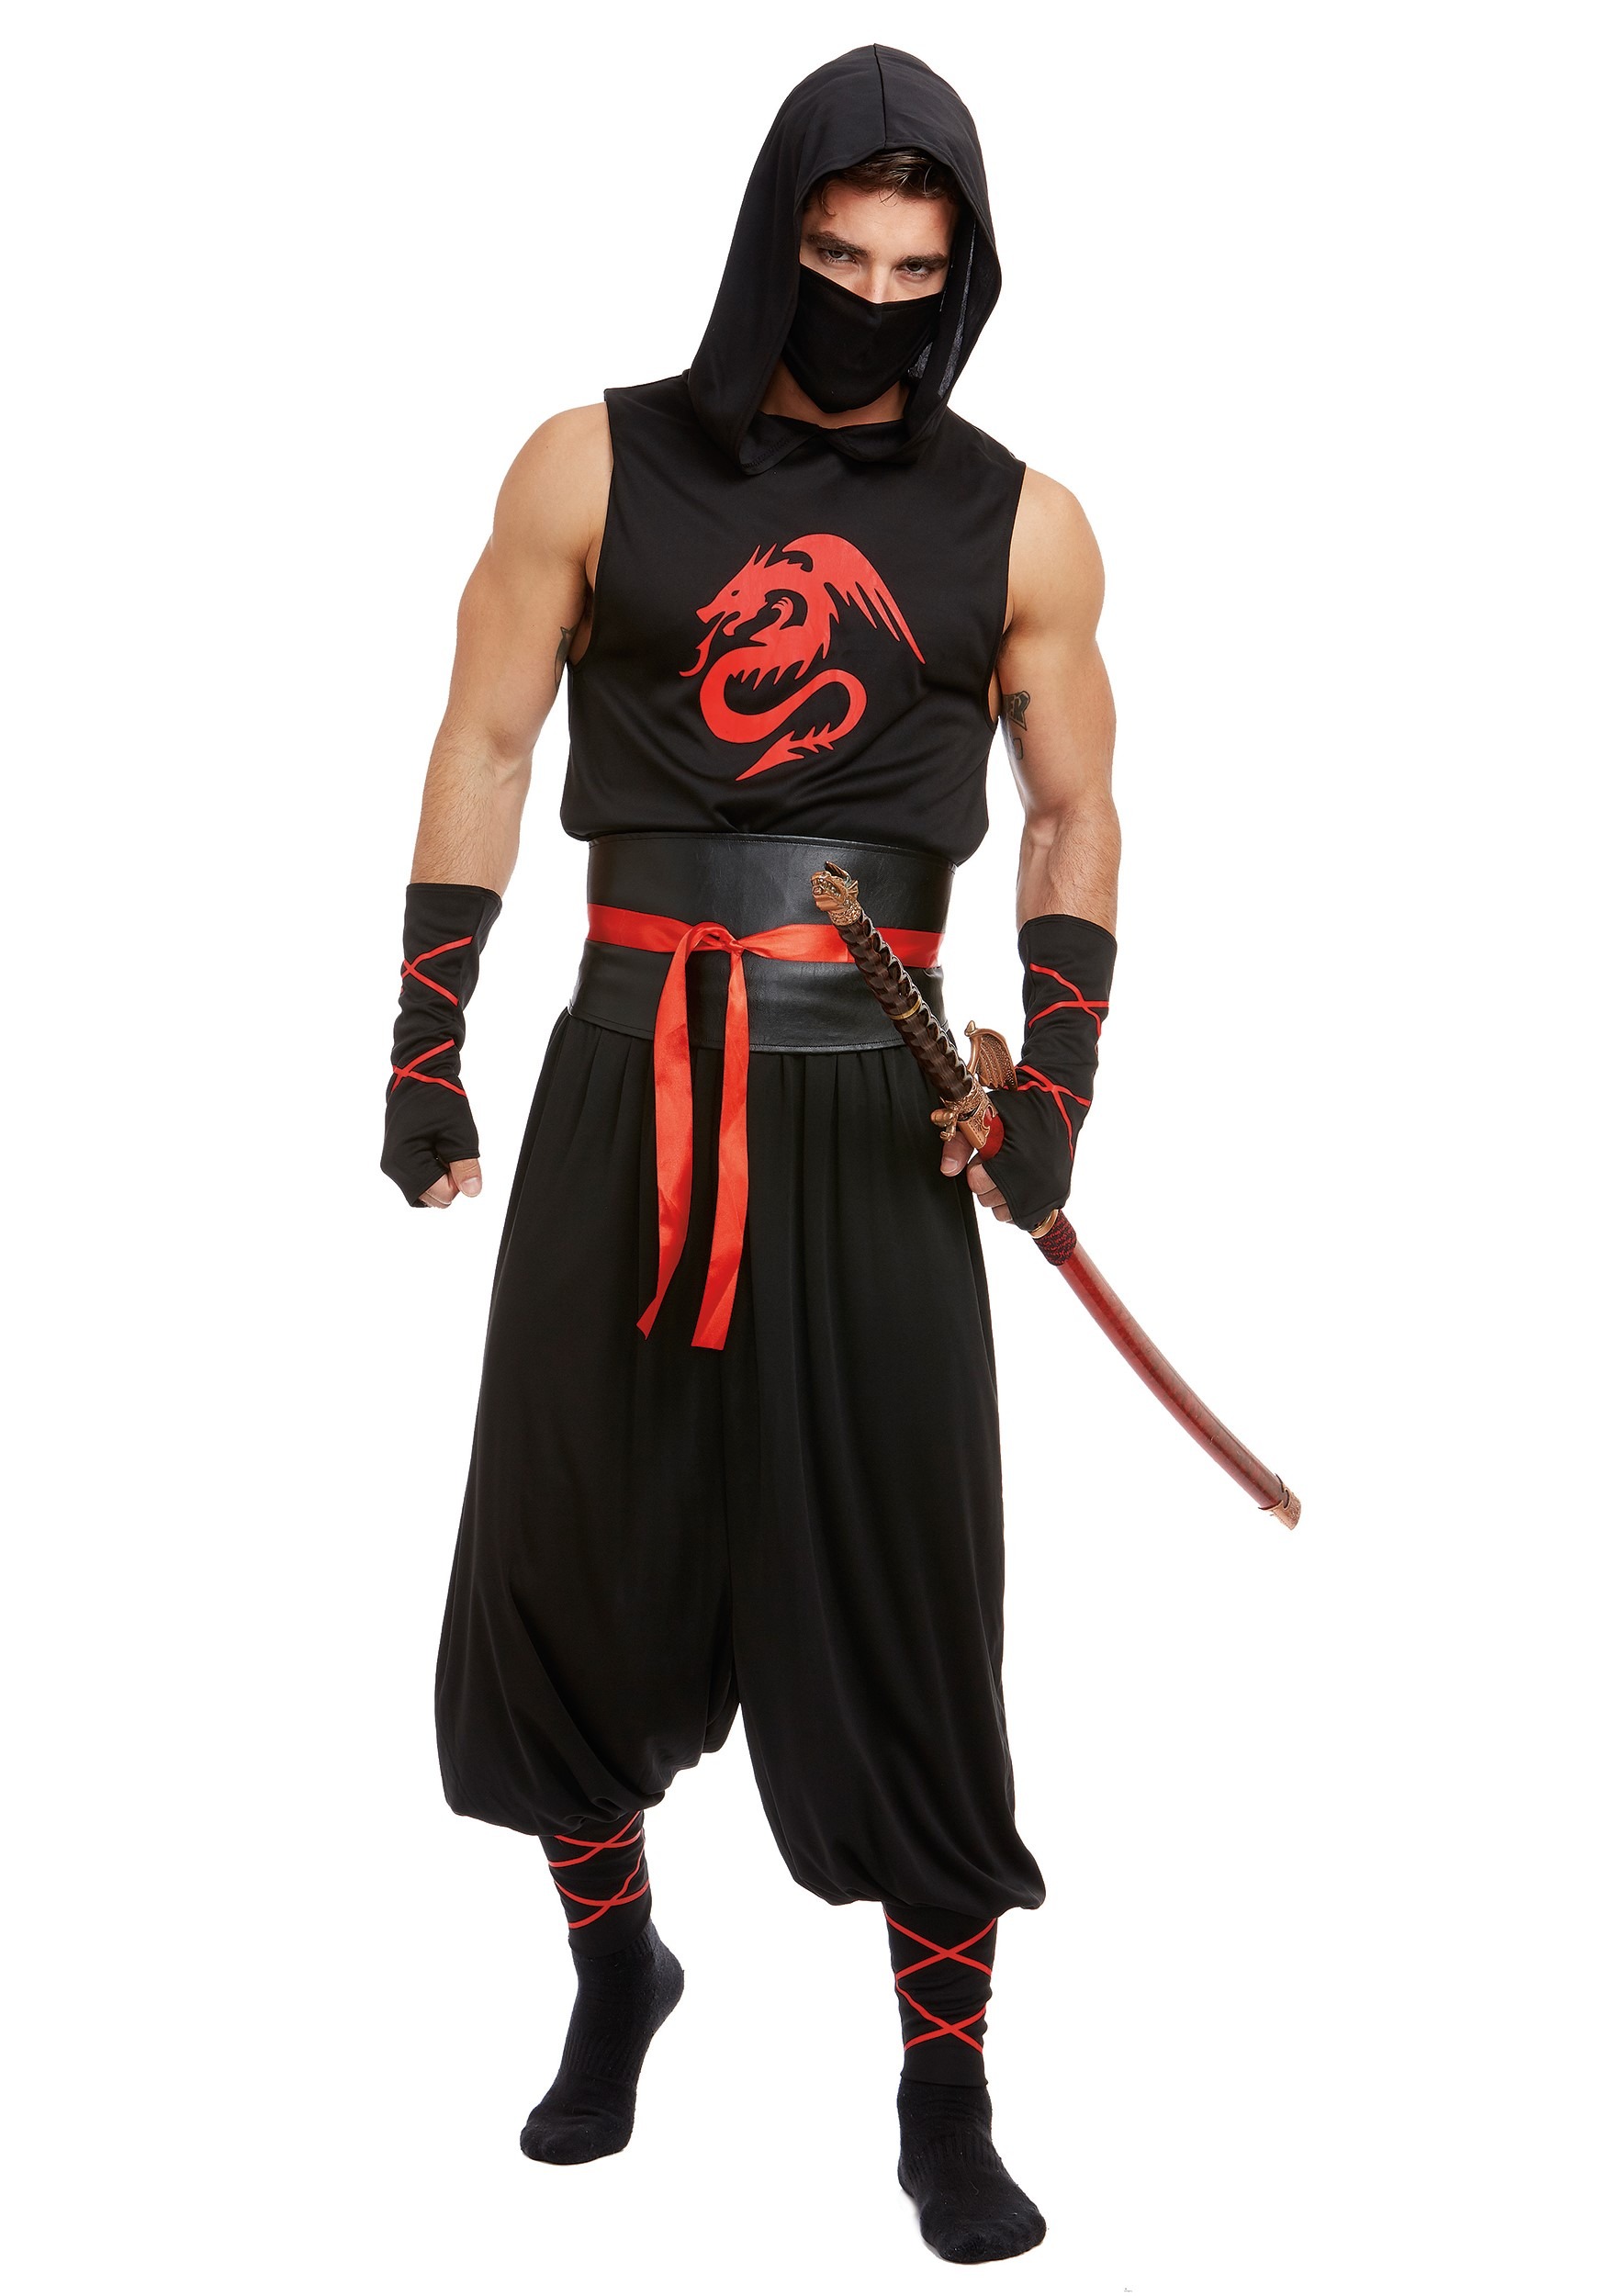 Cool Ninja Uniform